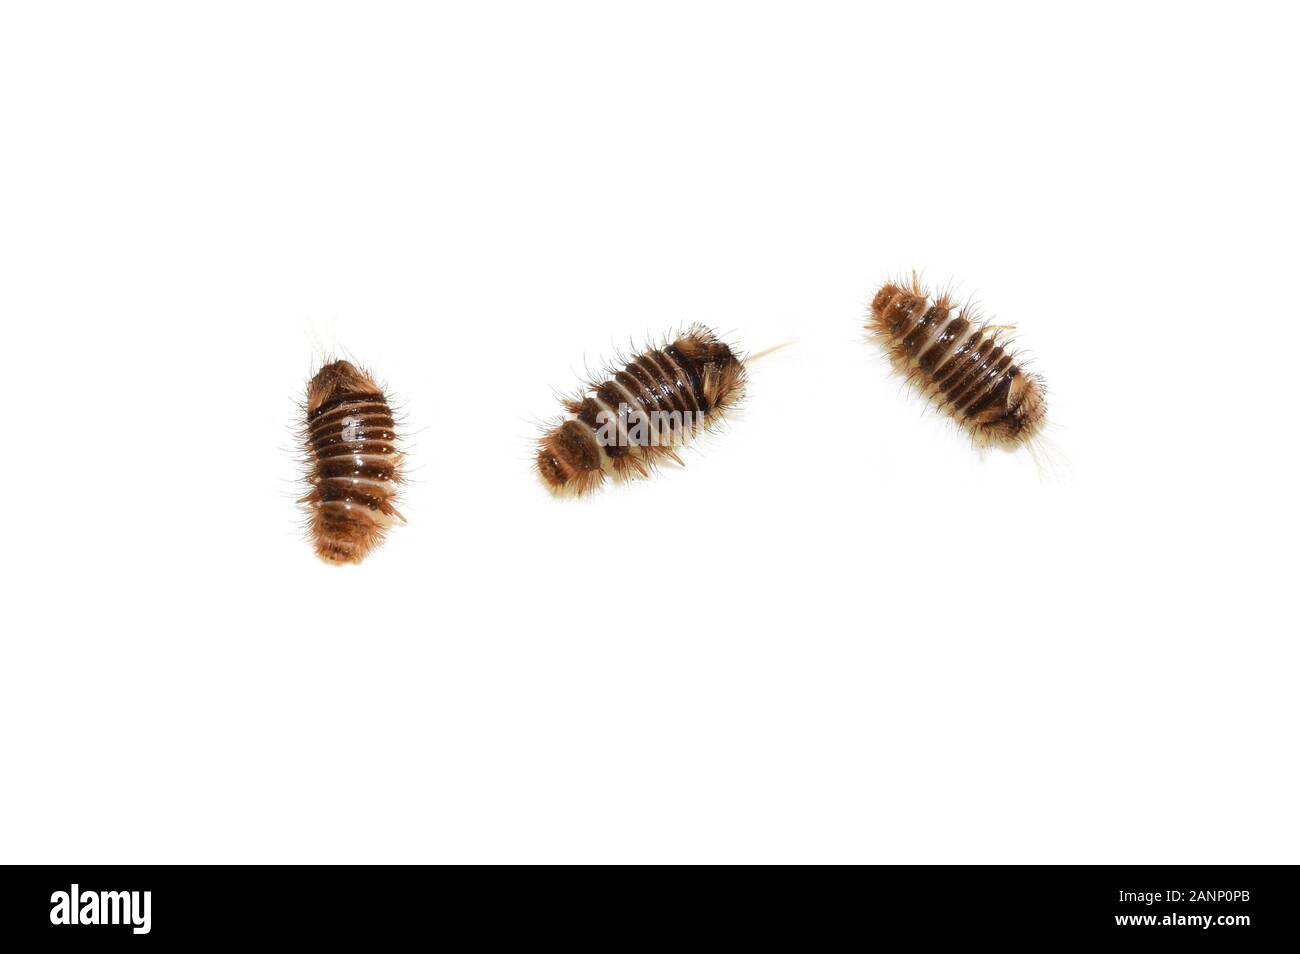 Several Anthrenus museorum museum beetles larva isolated on white background Stock Photo